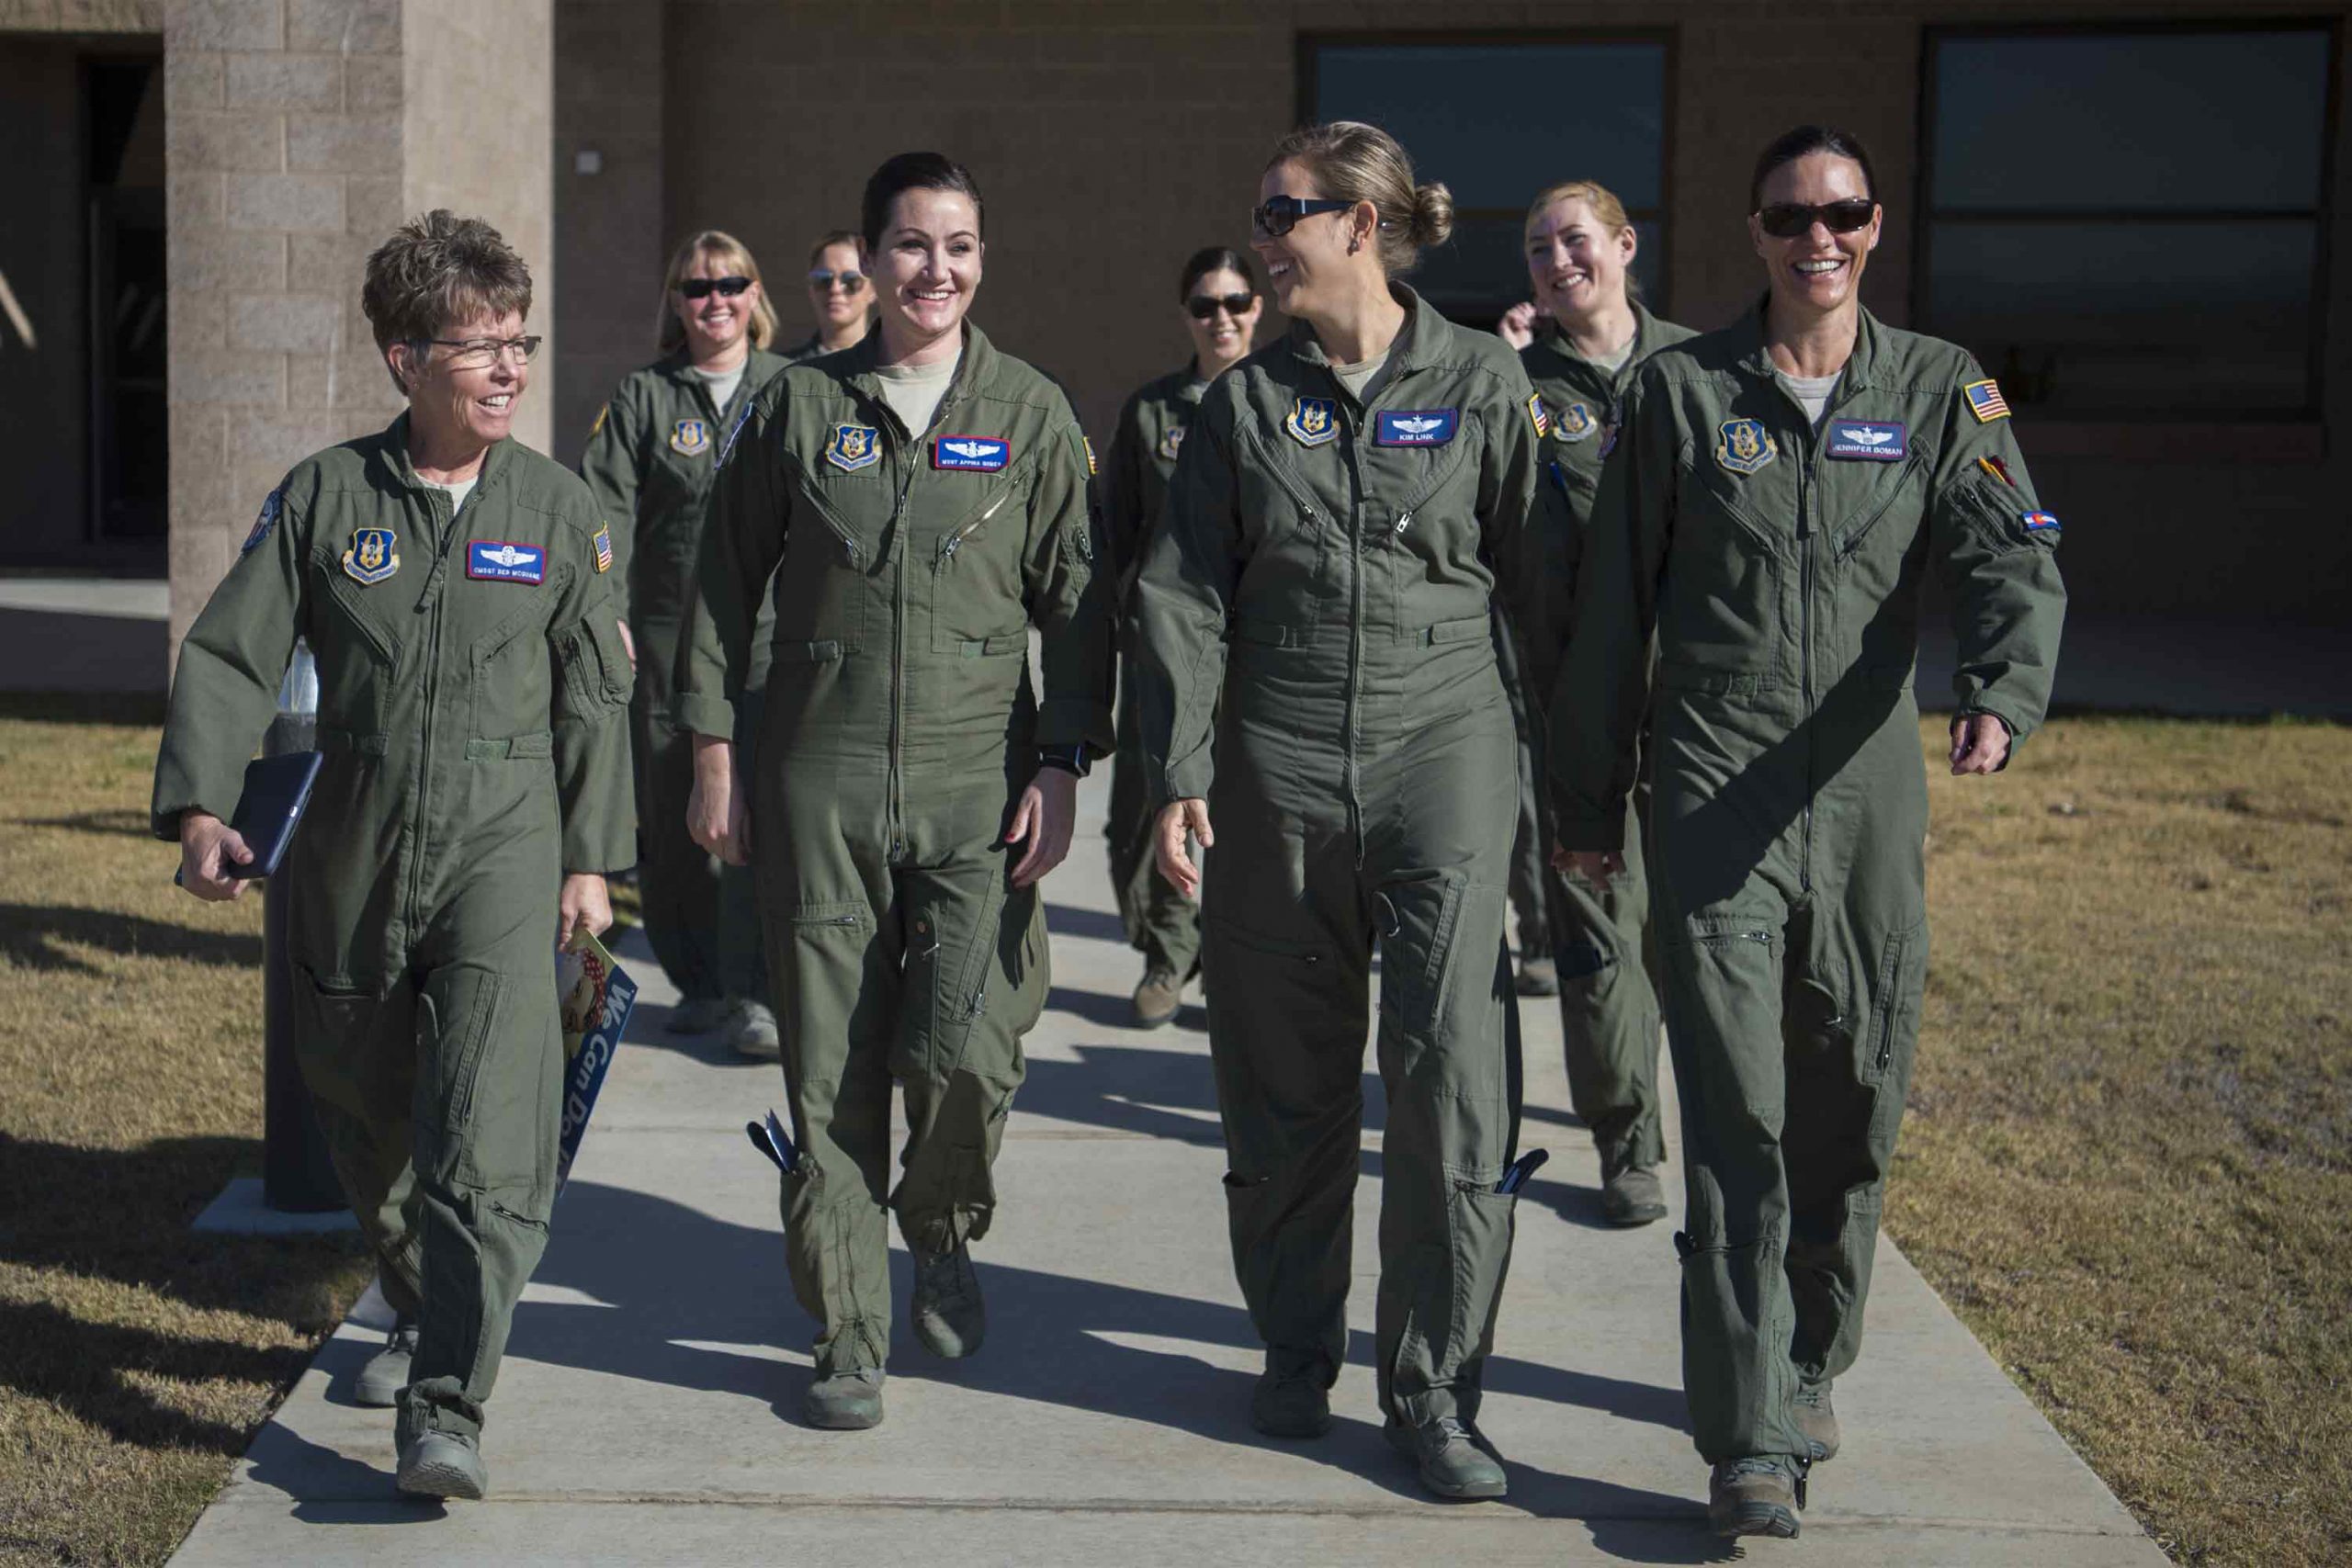 Us Air Force Women Naked Telegraph